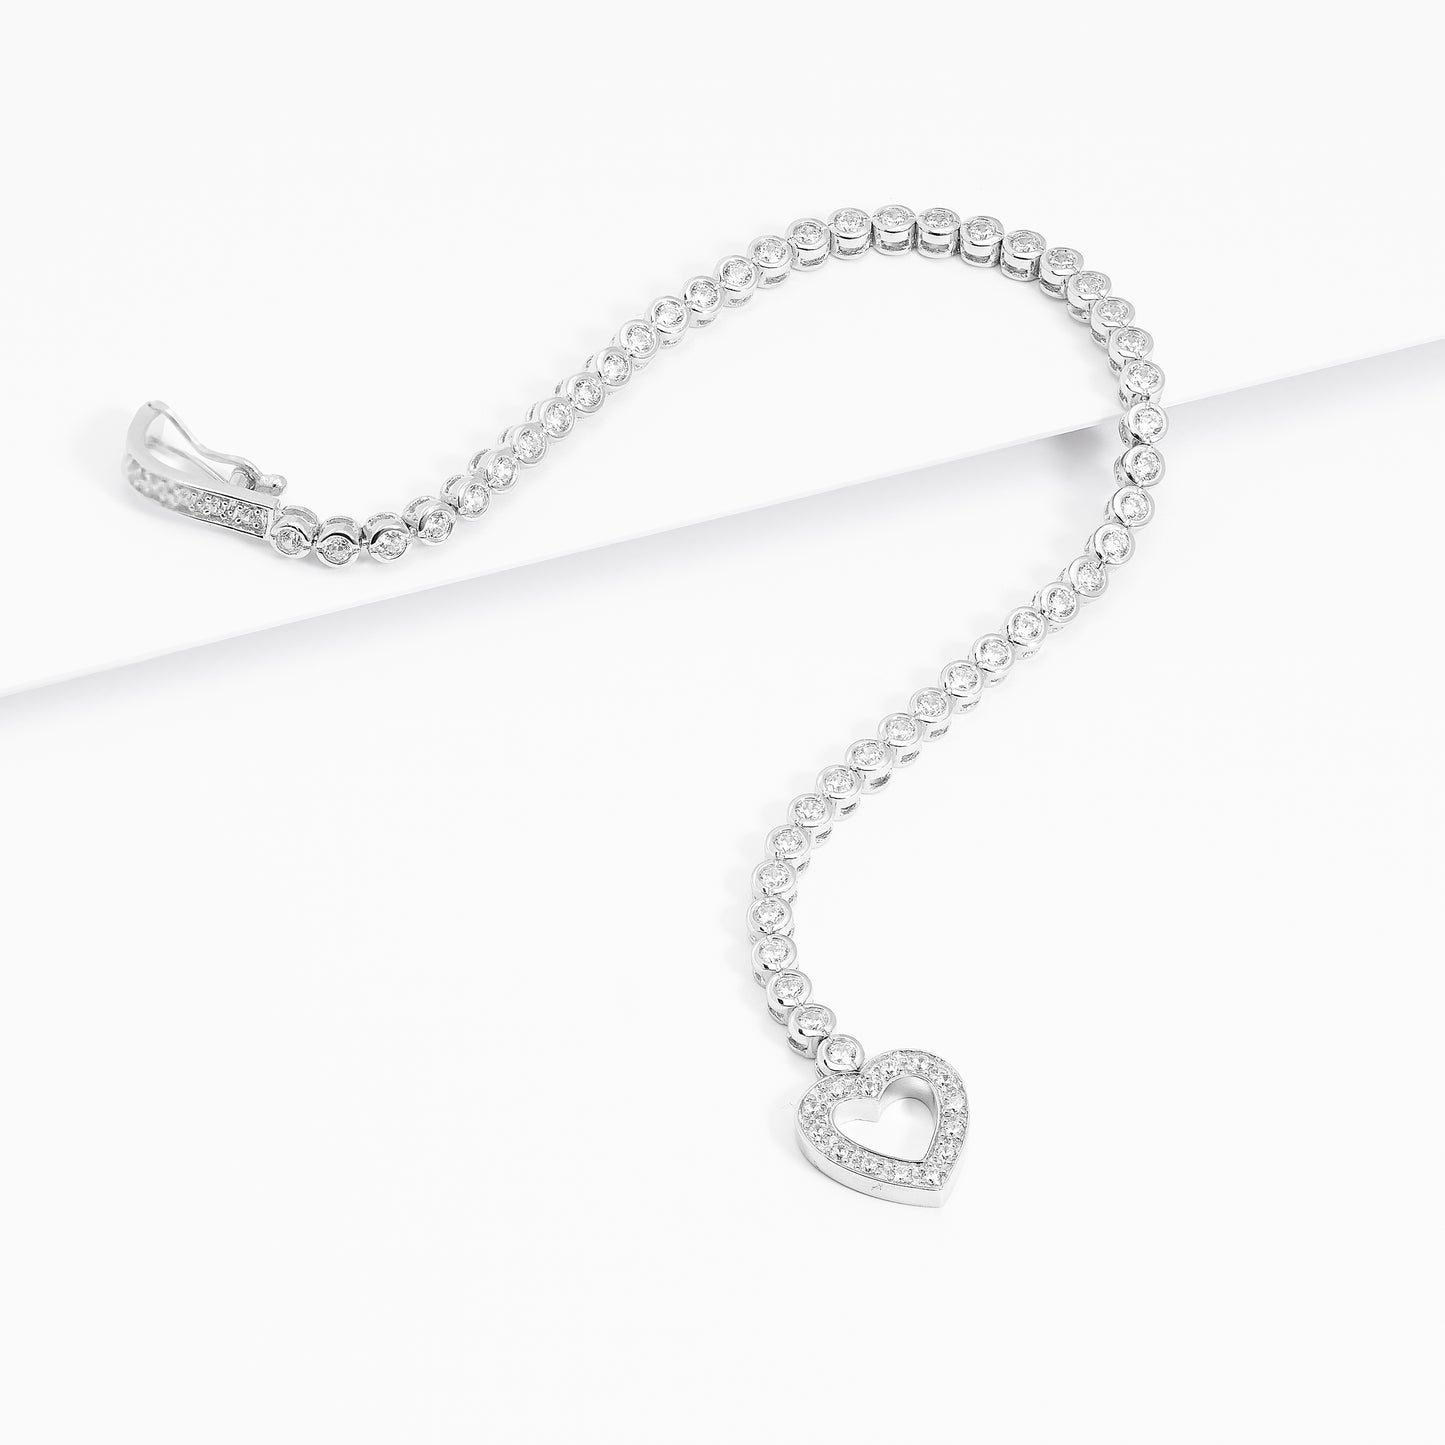 Sterling Silver Bezel Set Zirconia Tennis Bracelet With Heart Clasp 18cm